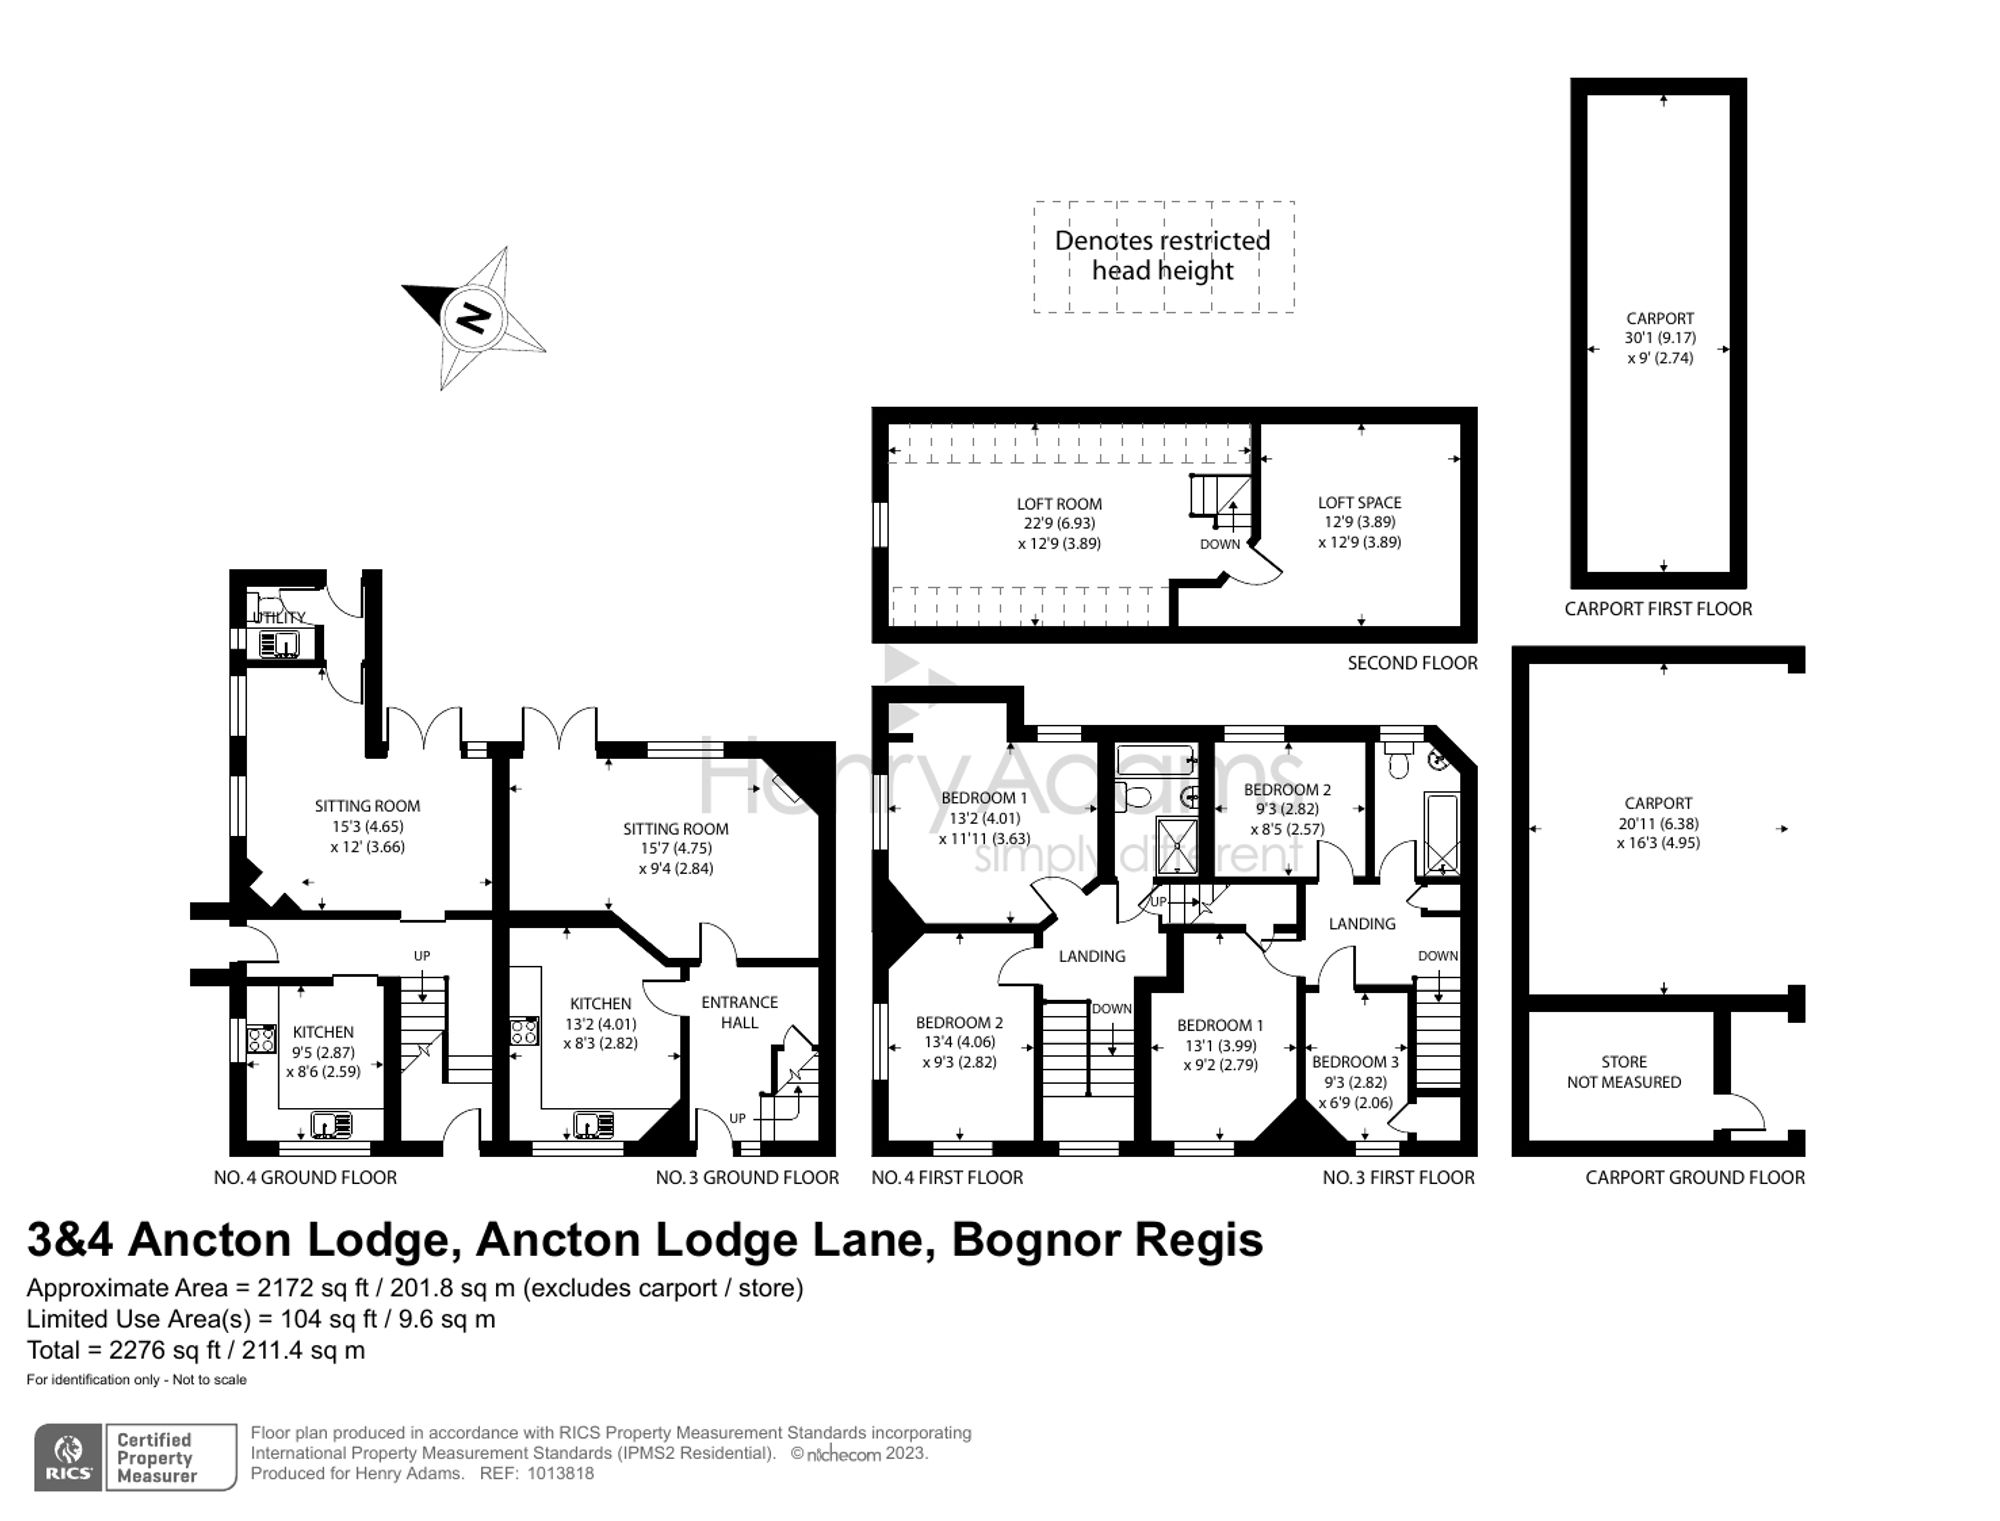 Ancton Lodge Lane, Bognor Regis, PO22 floorplans